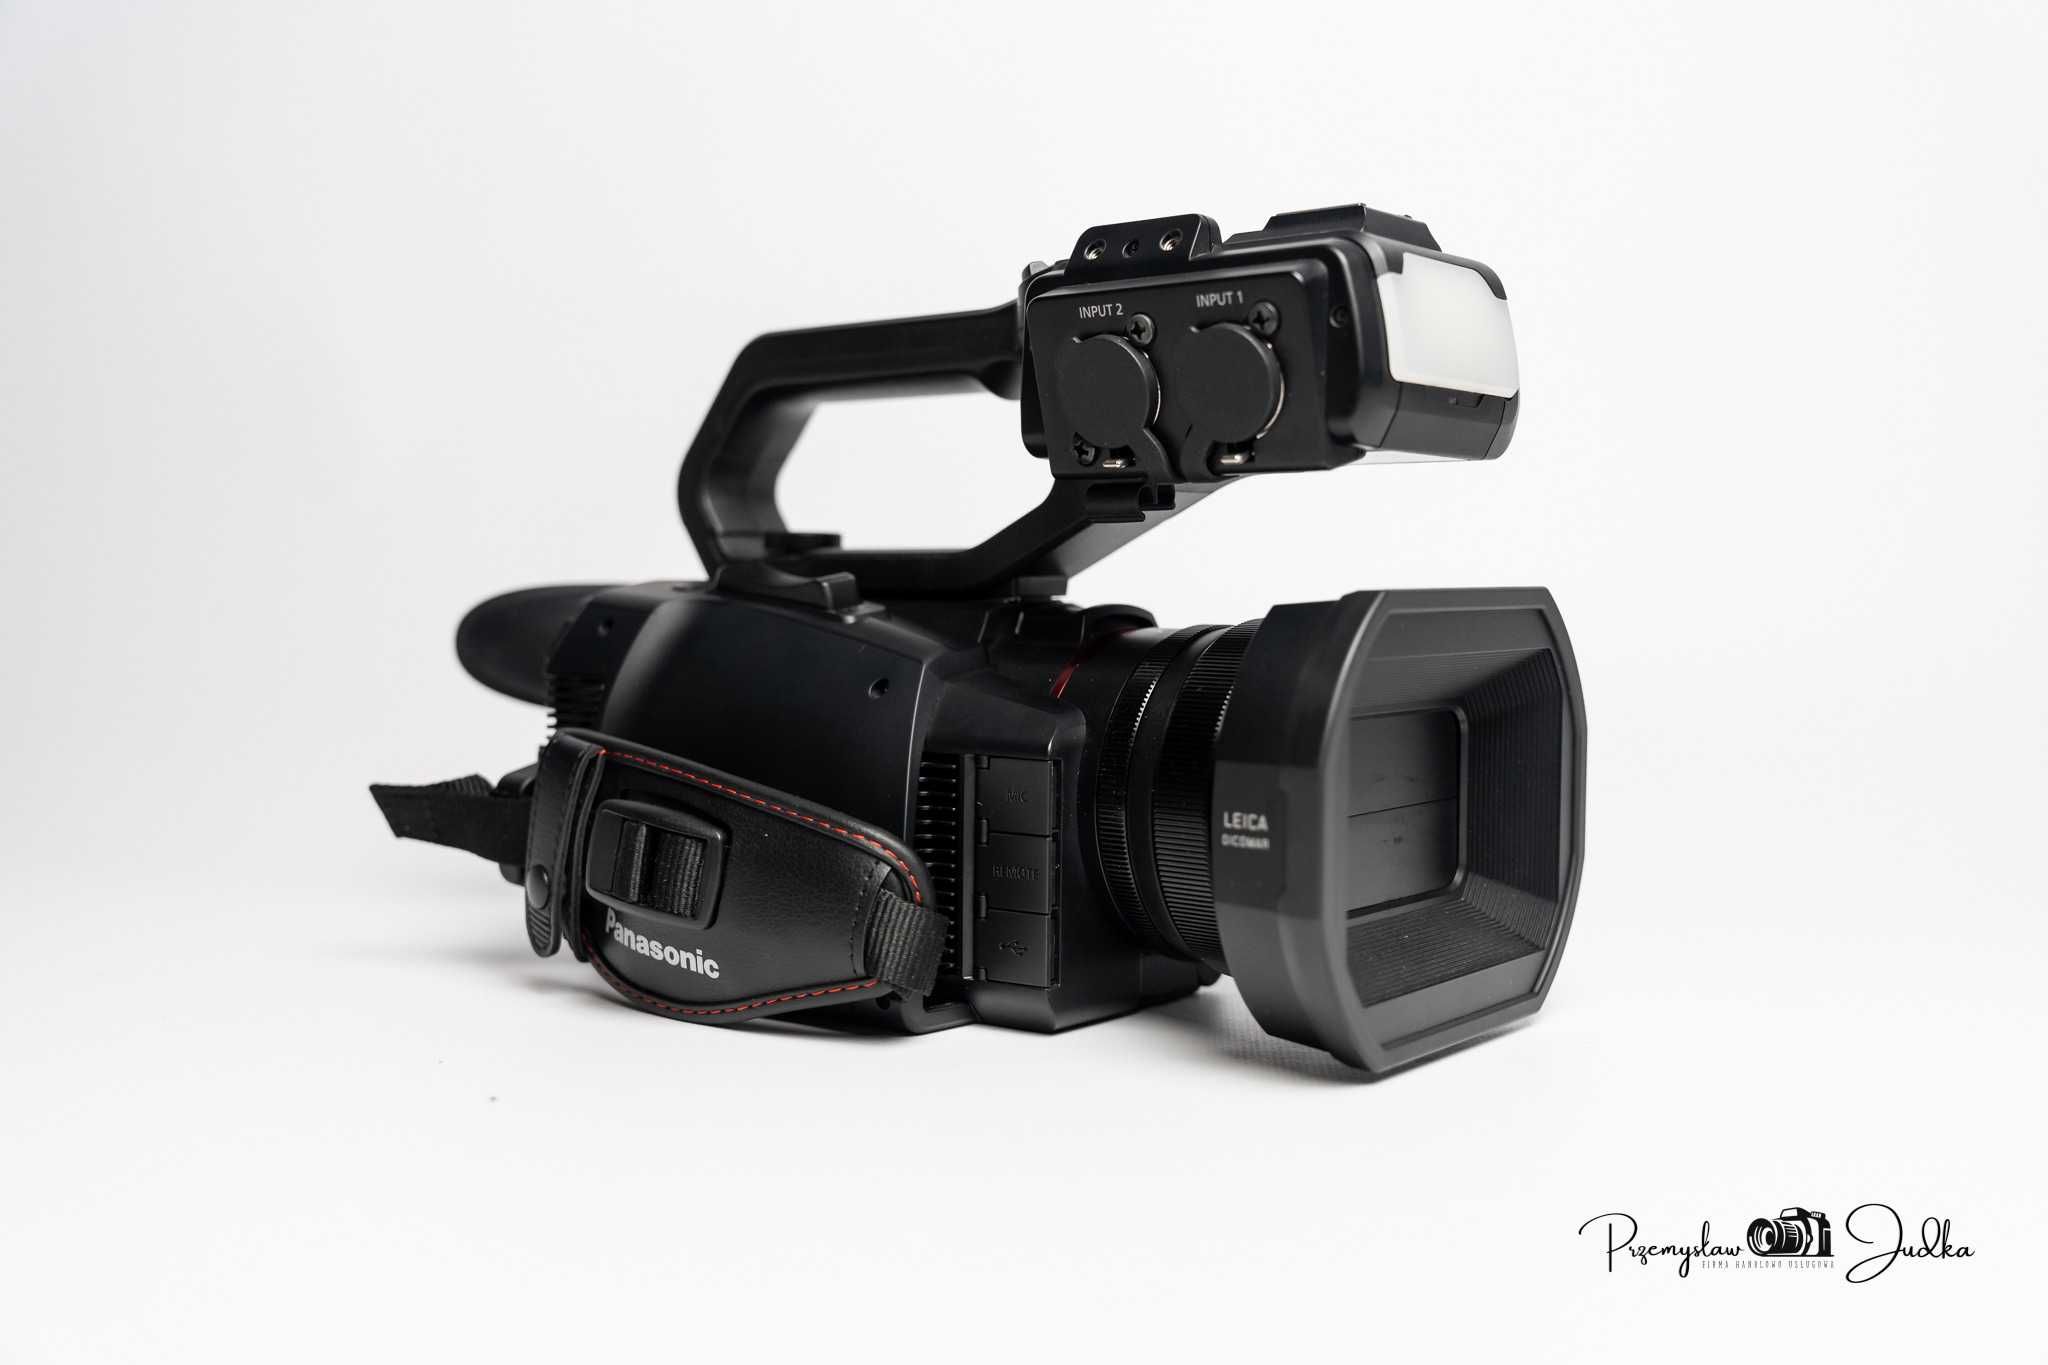 Panasonic AG-CX10ES kamera 4K igła | komplet | faktura przebieg 63h!